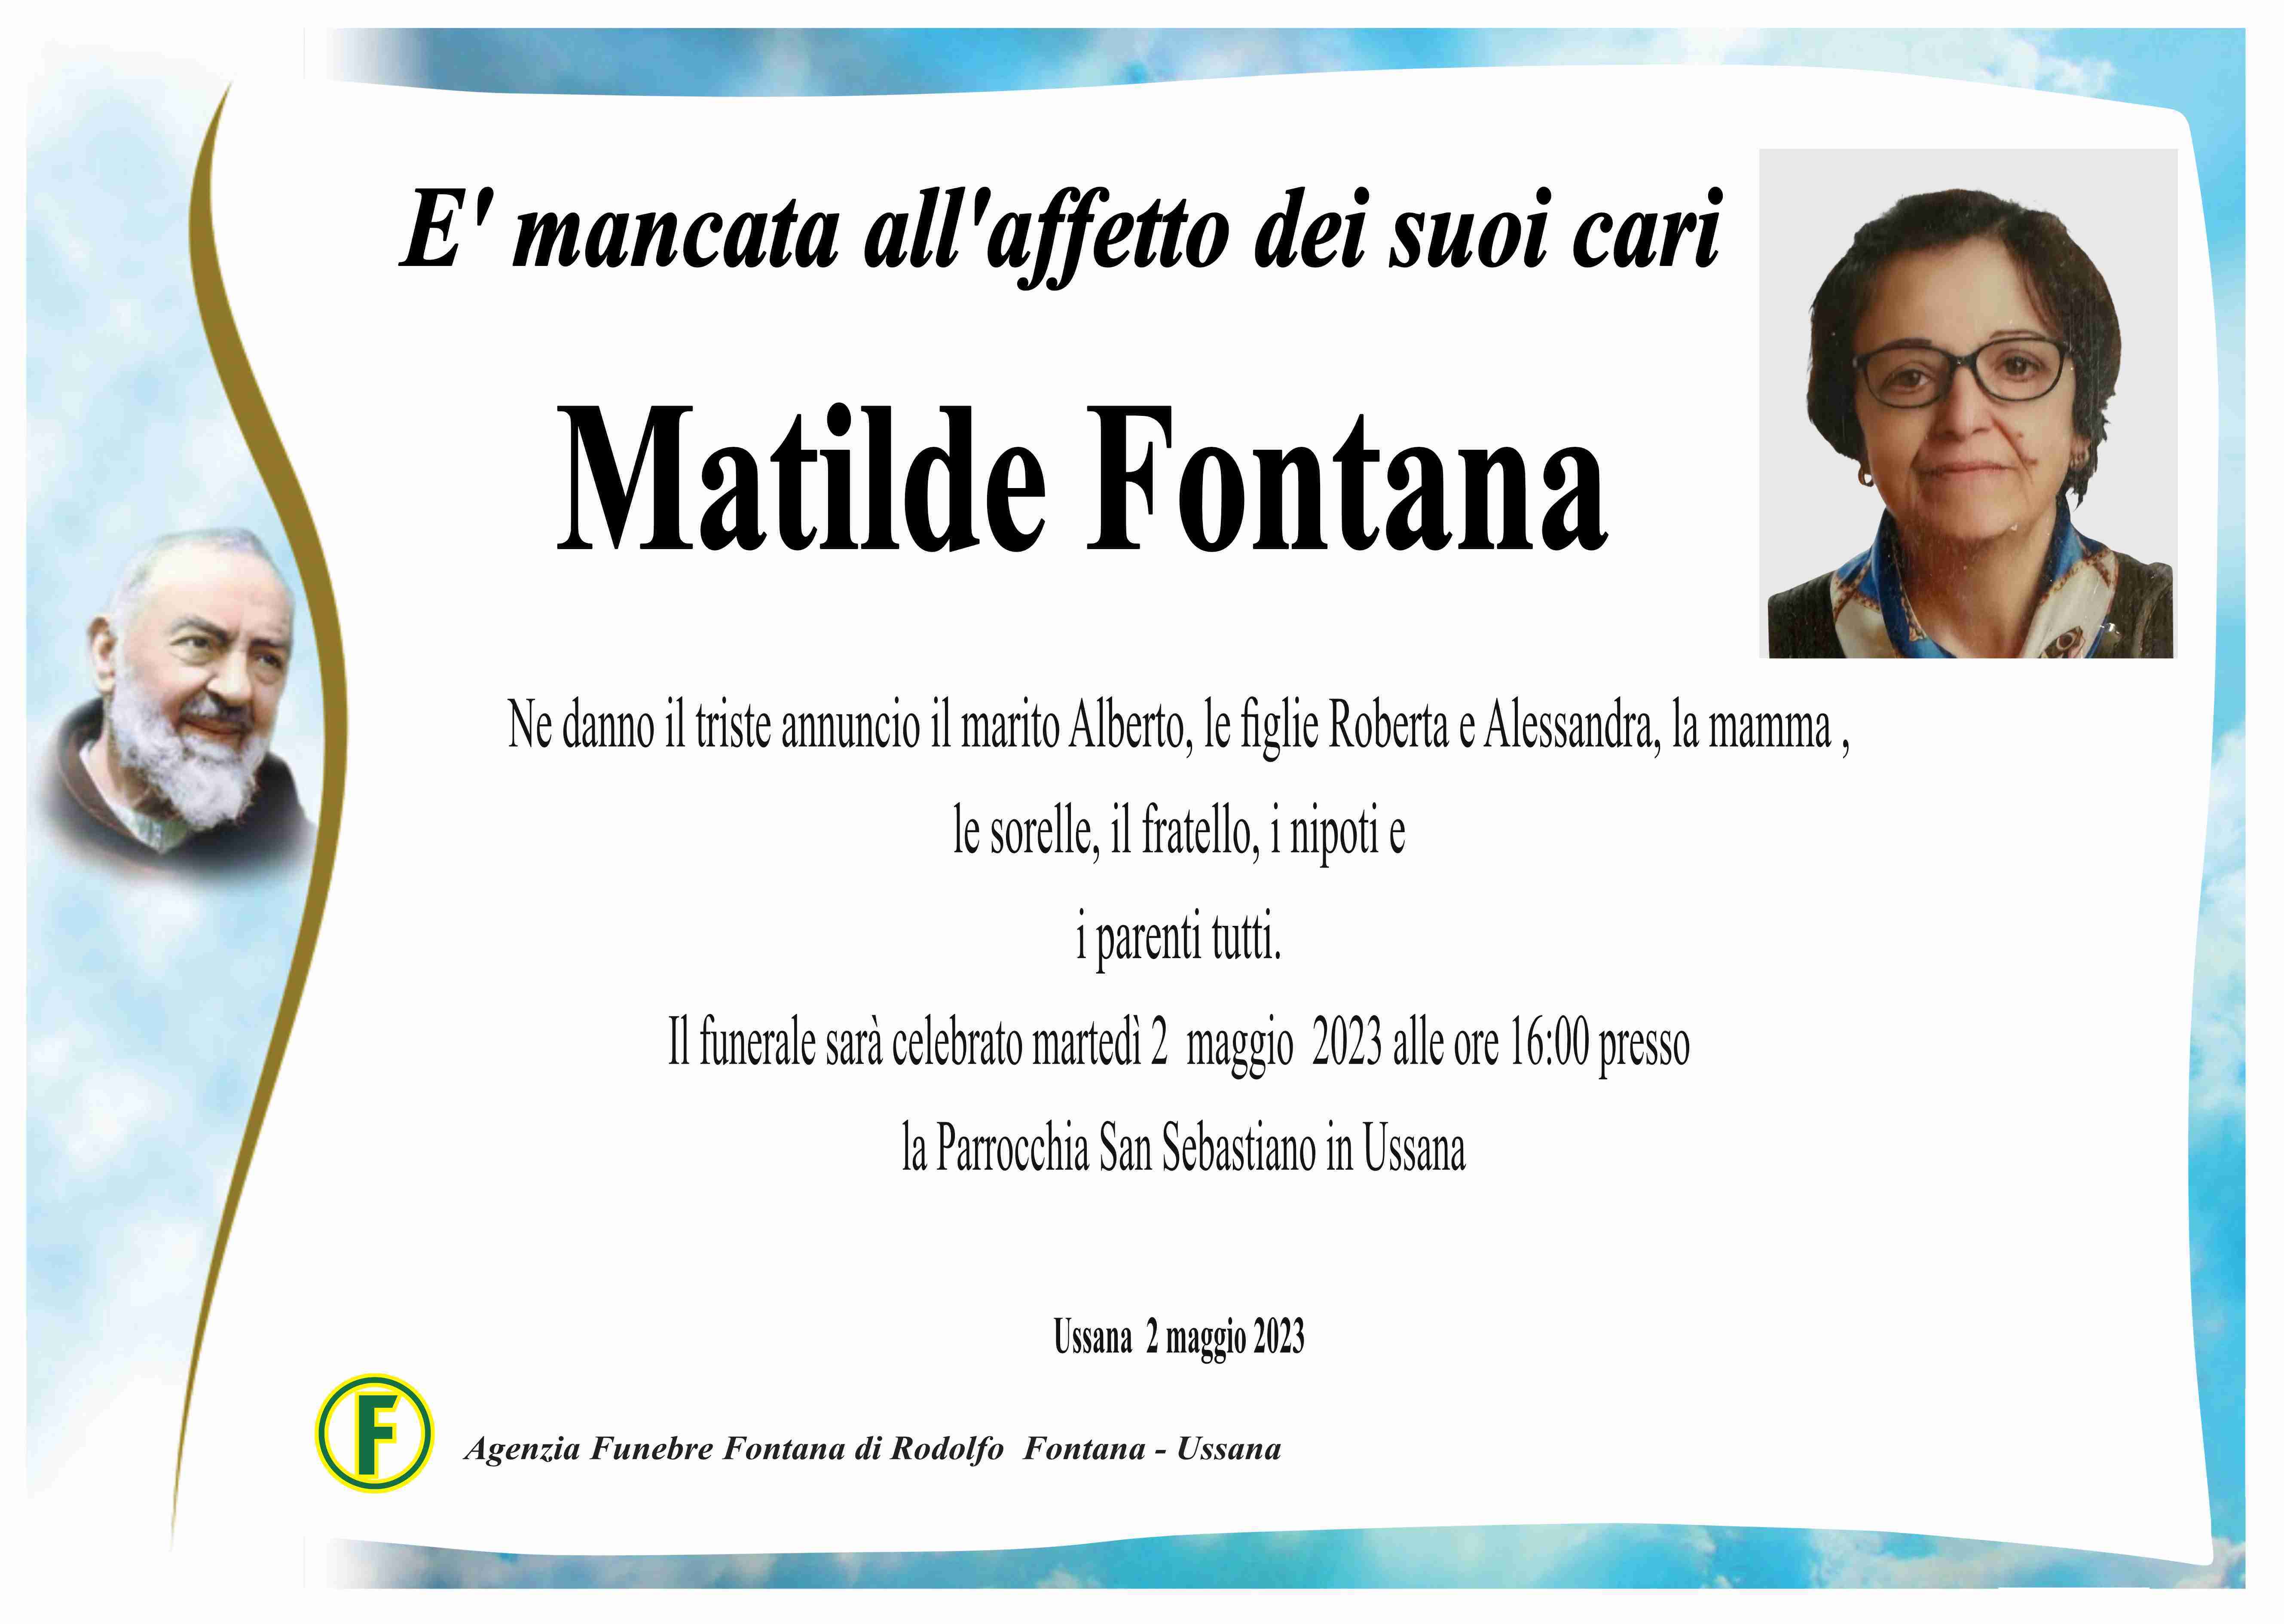 Matilde Fontana